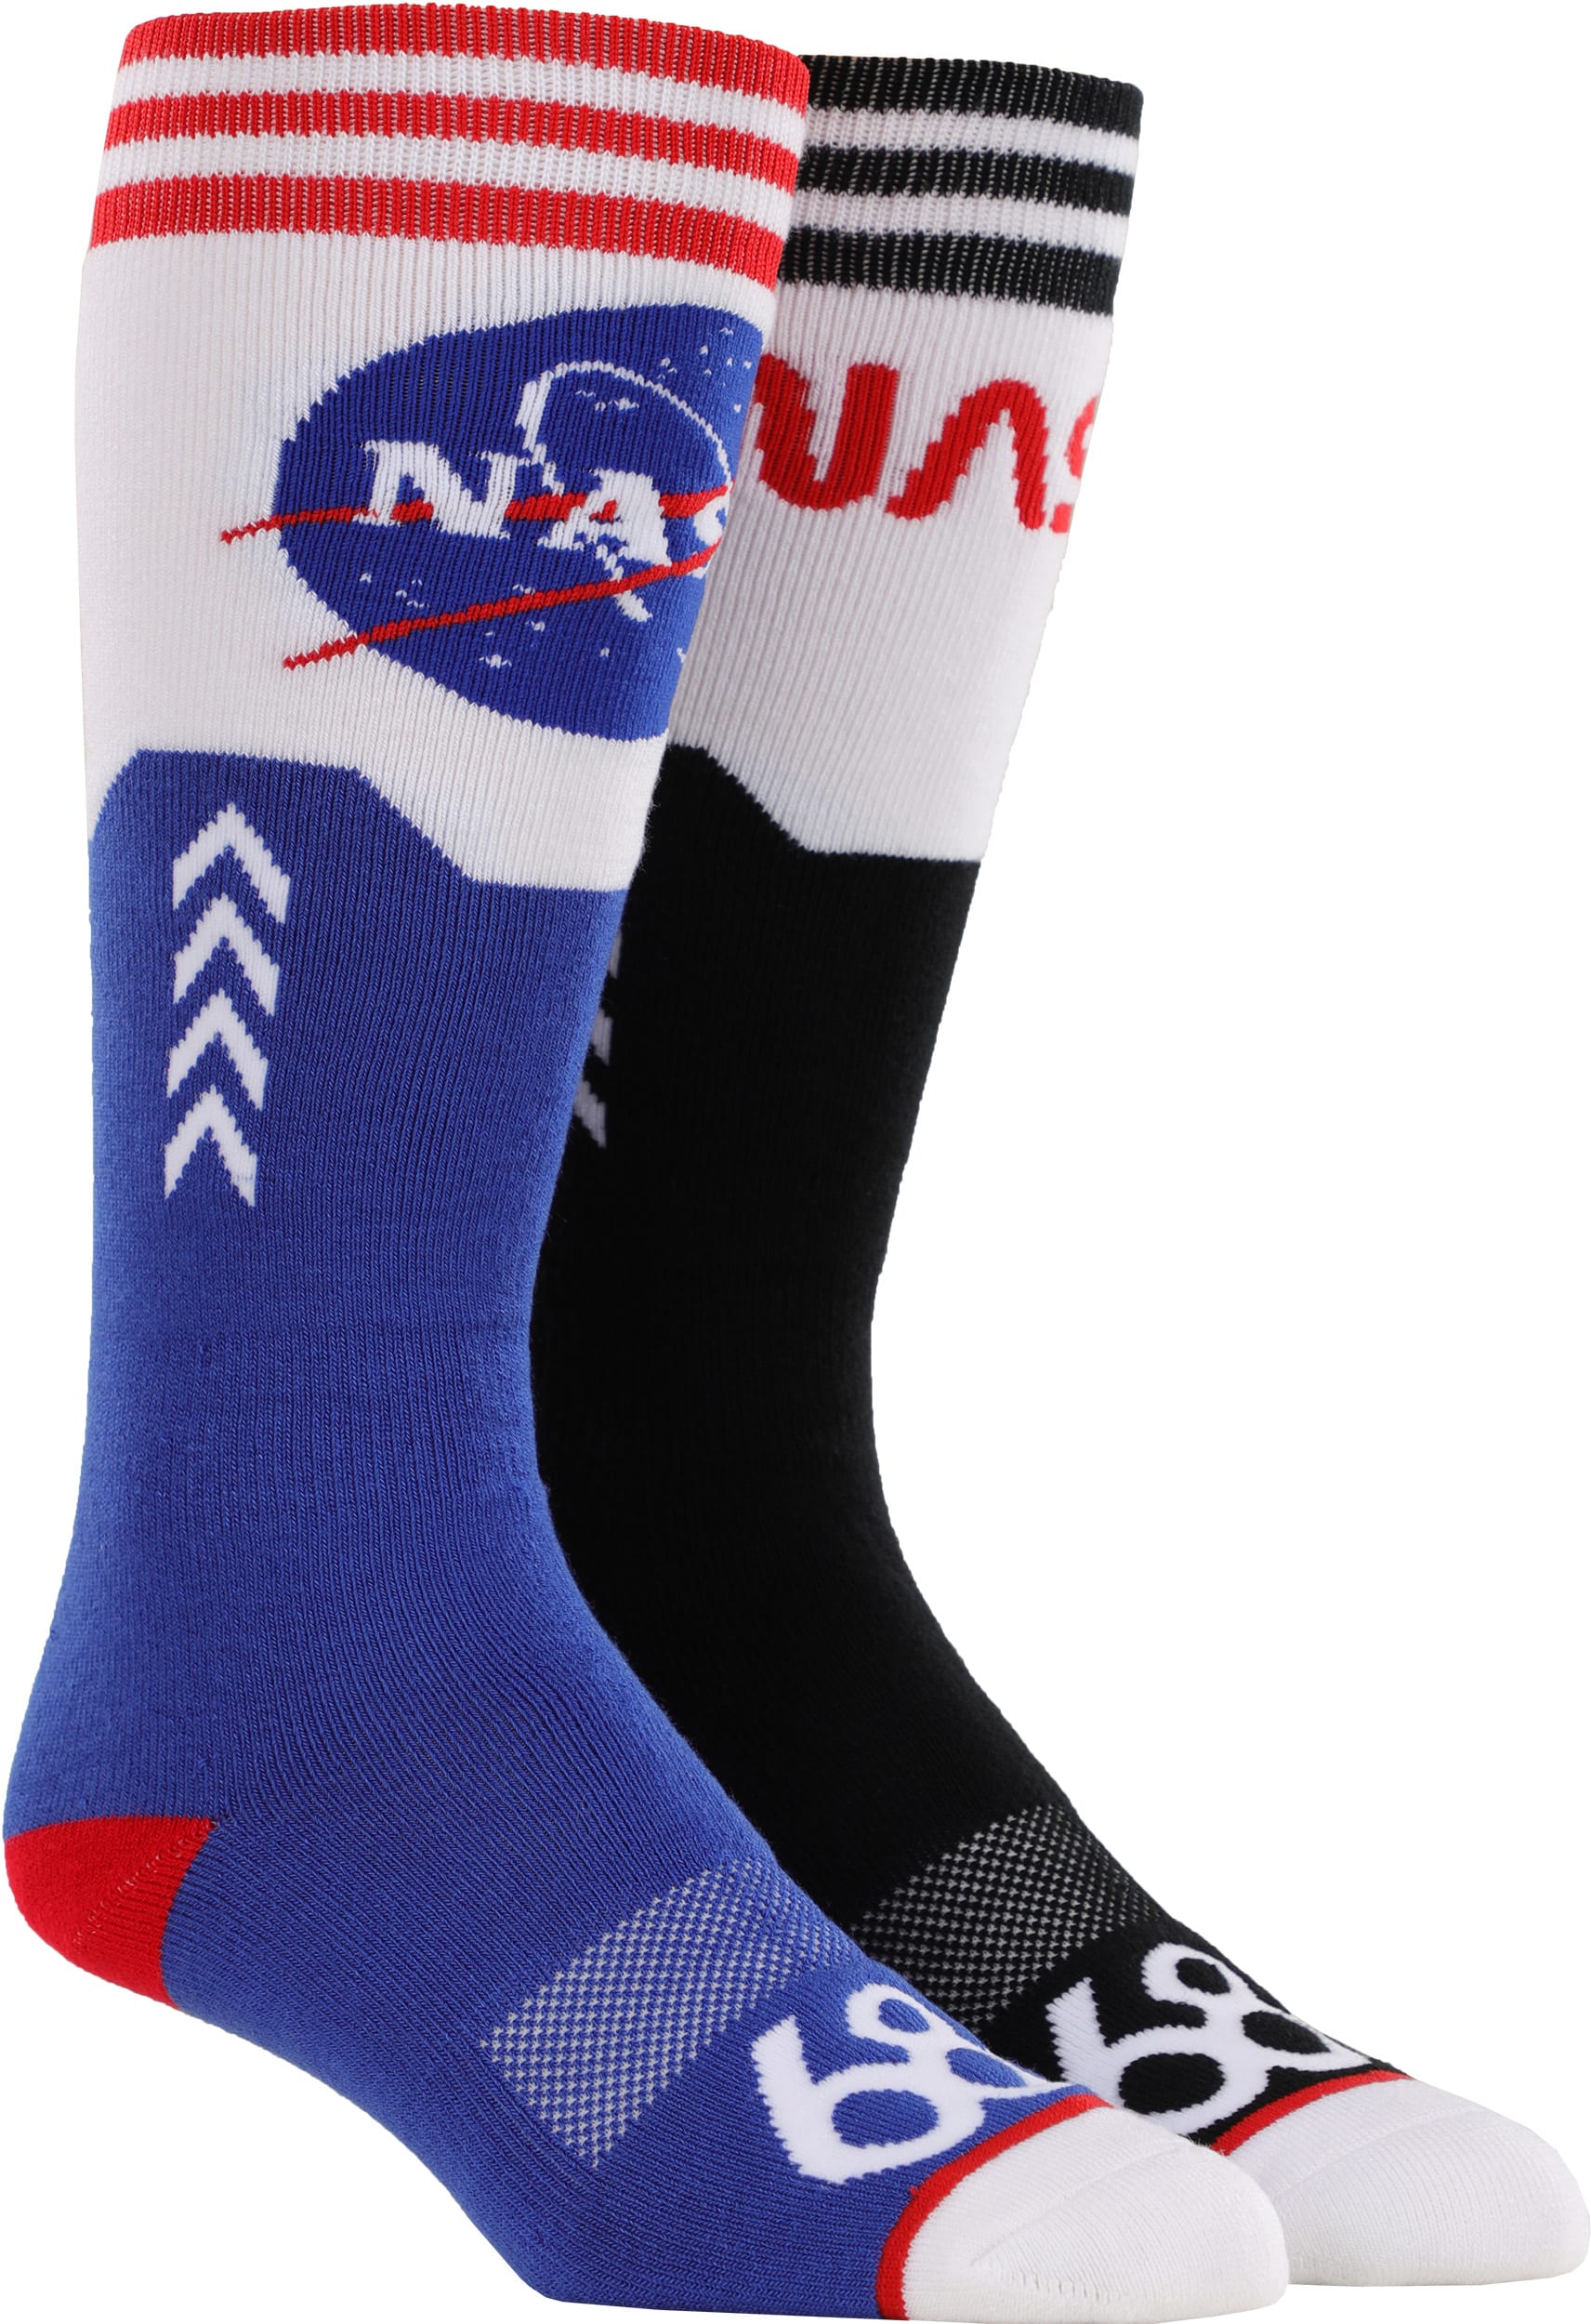 686 NASA 2-Pack Snowboard Socks - black pair + blue pair | Tactics